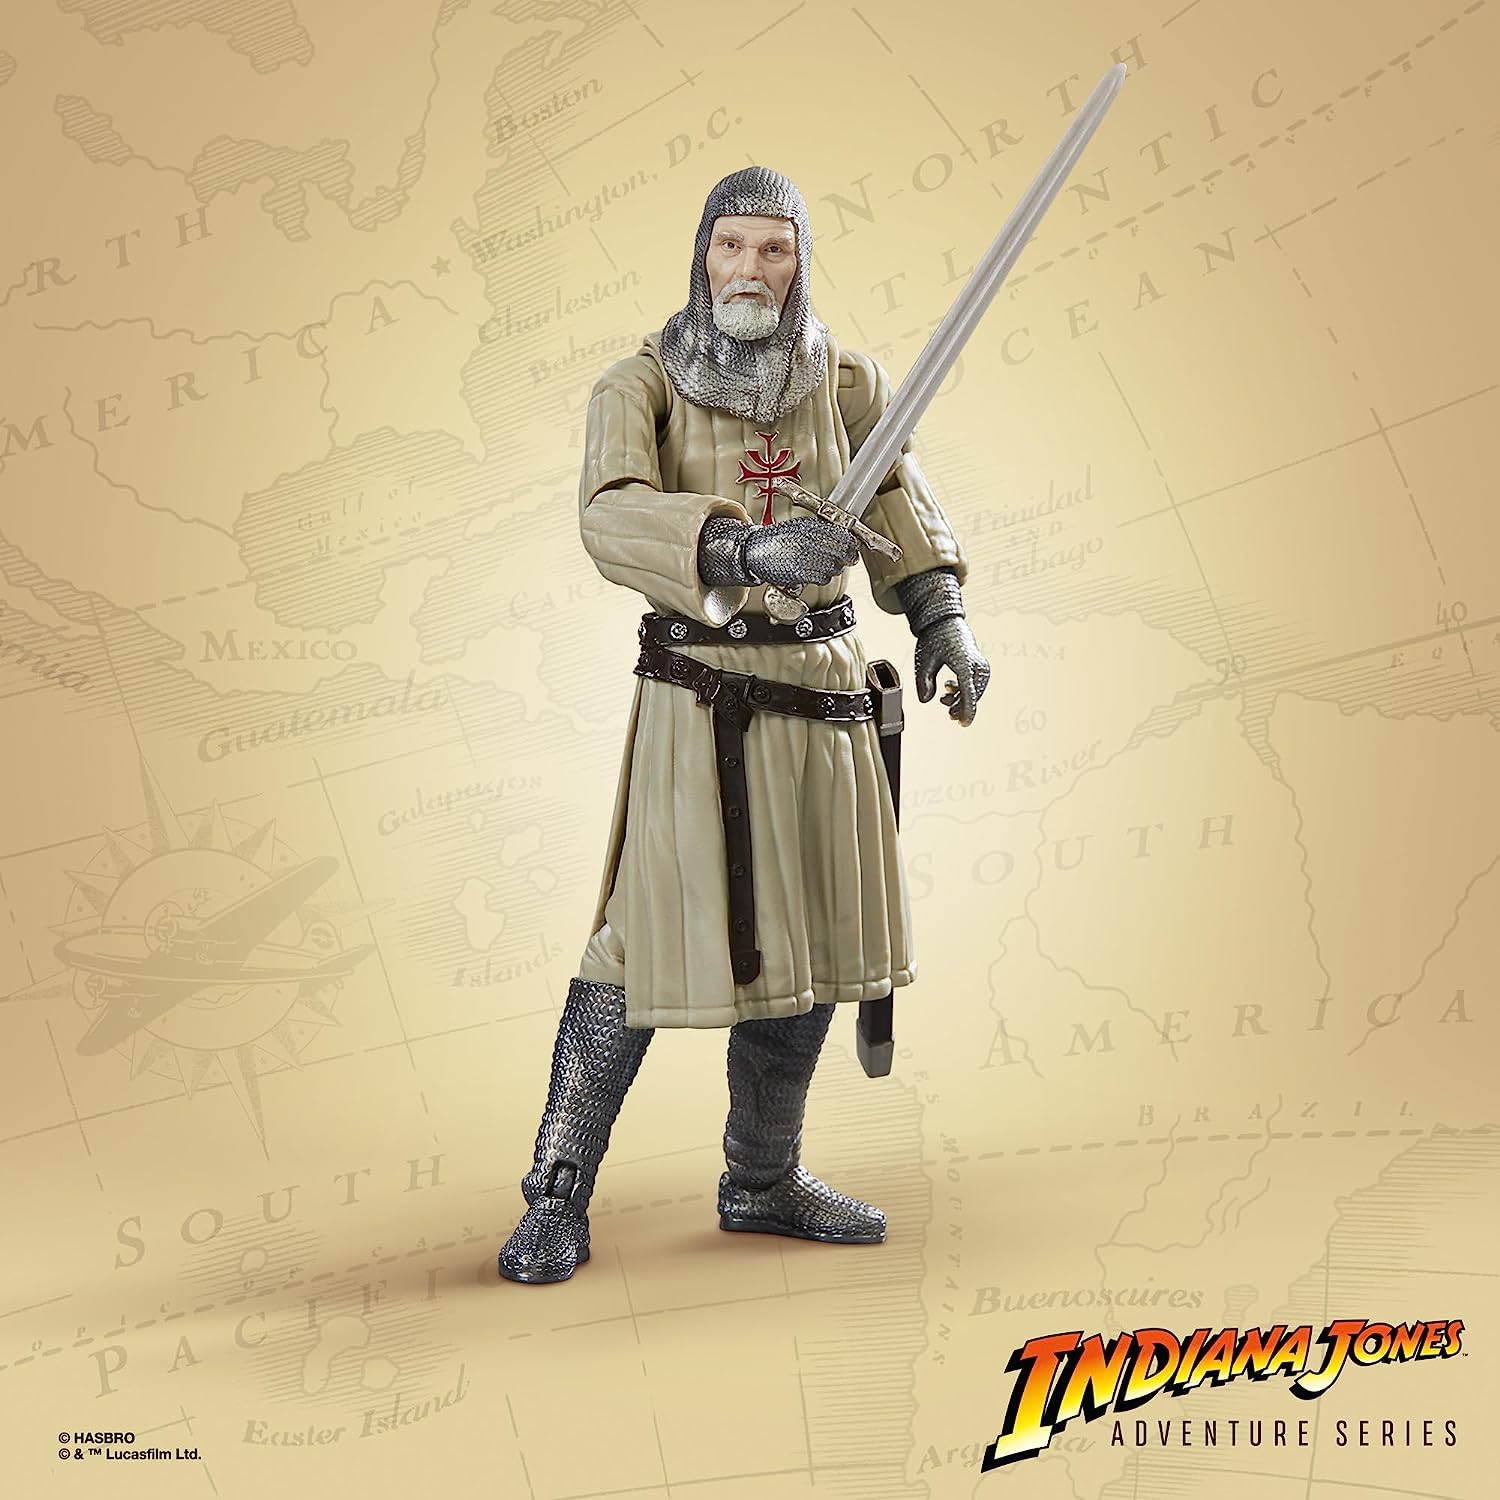 Indiana Jones Adventure Series Grail Knight 6-Inch Action Figure 正規品画像